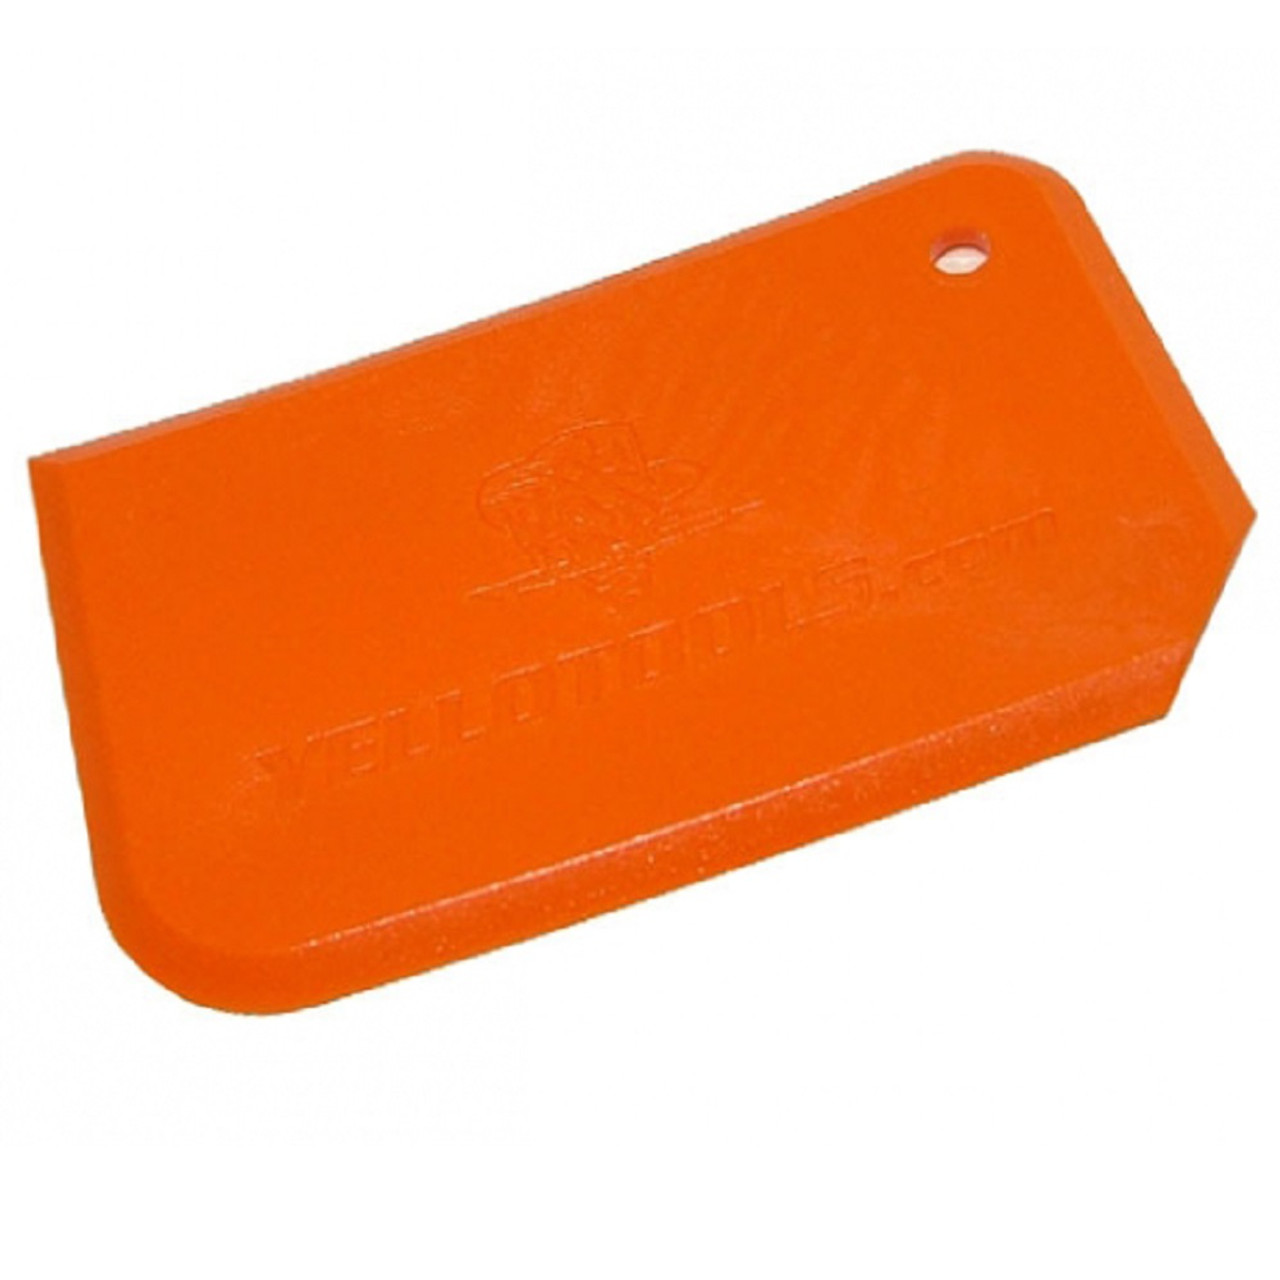 Orange Peel Adhesive Remover - USCutter